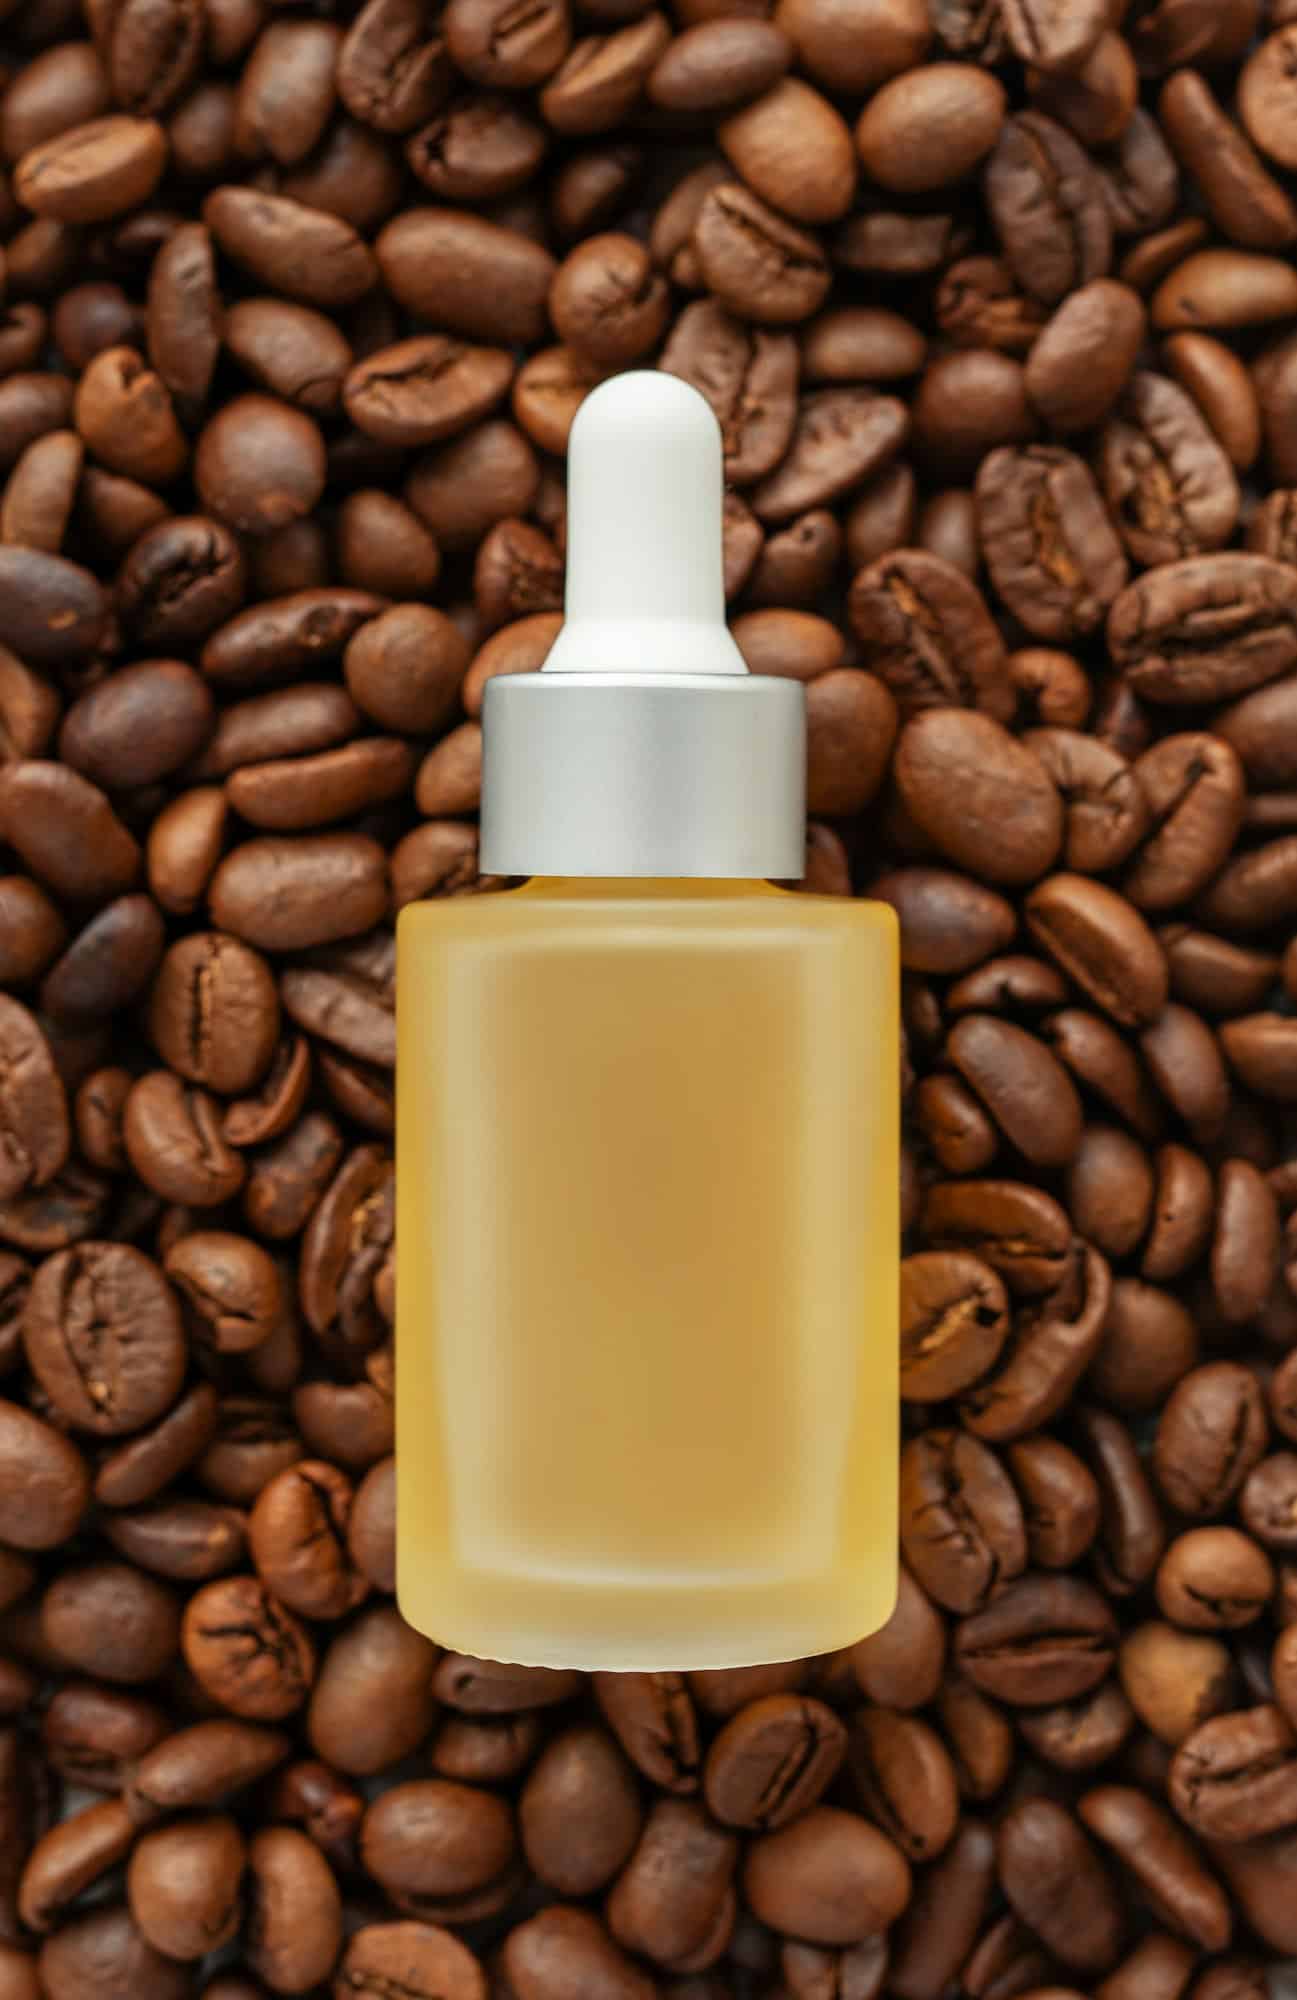 Skincare caffeine eye serum. Product bottle and coffee beans.